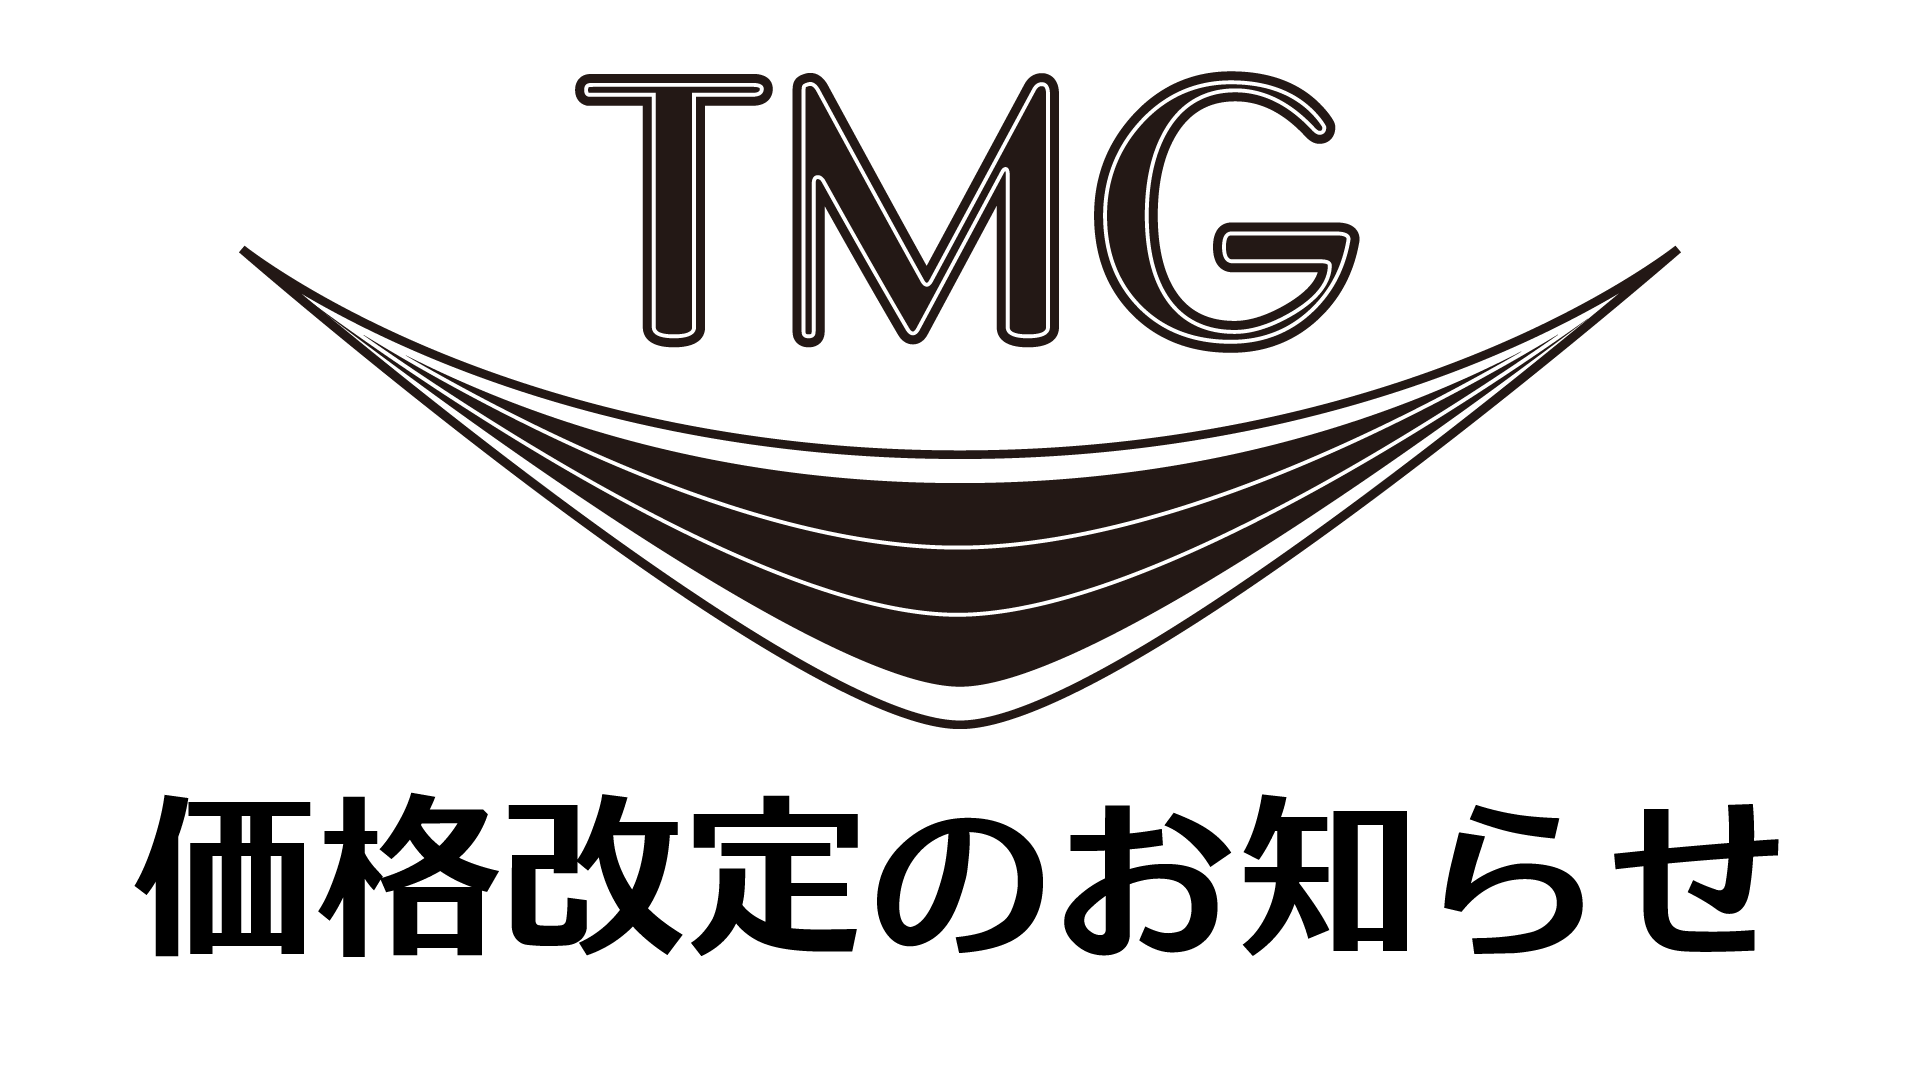 TMG Guitar 価格改定のお知らせ - TC楽器 - TCGAKKI